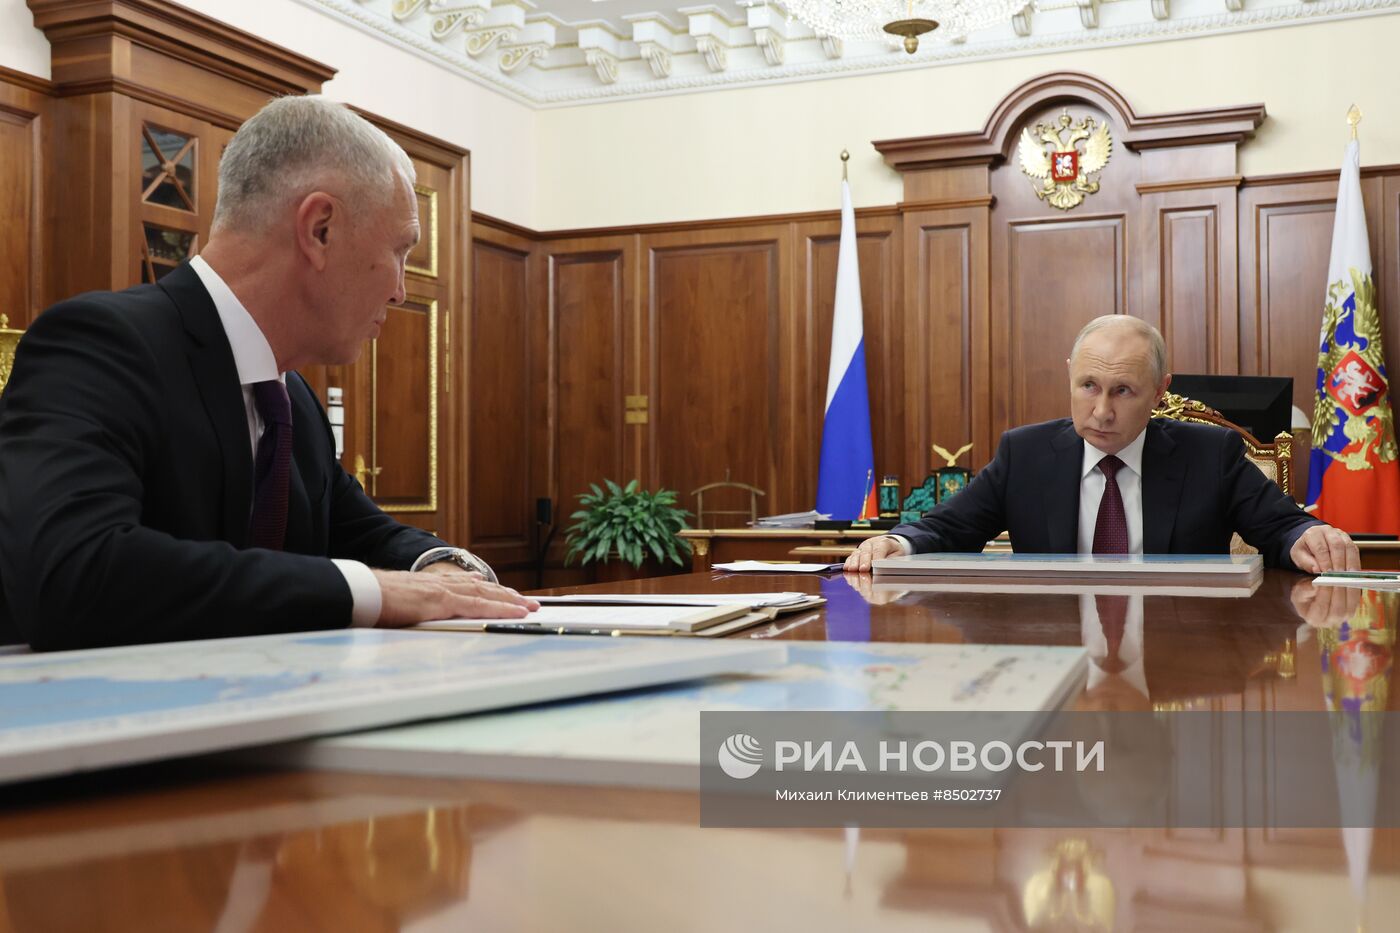 Встреча президента РФ В. Путина и врио губернатора Херсонской области В. Сальдо